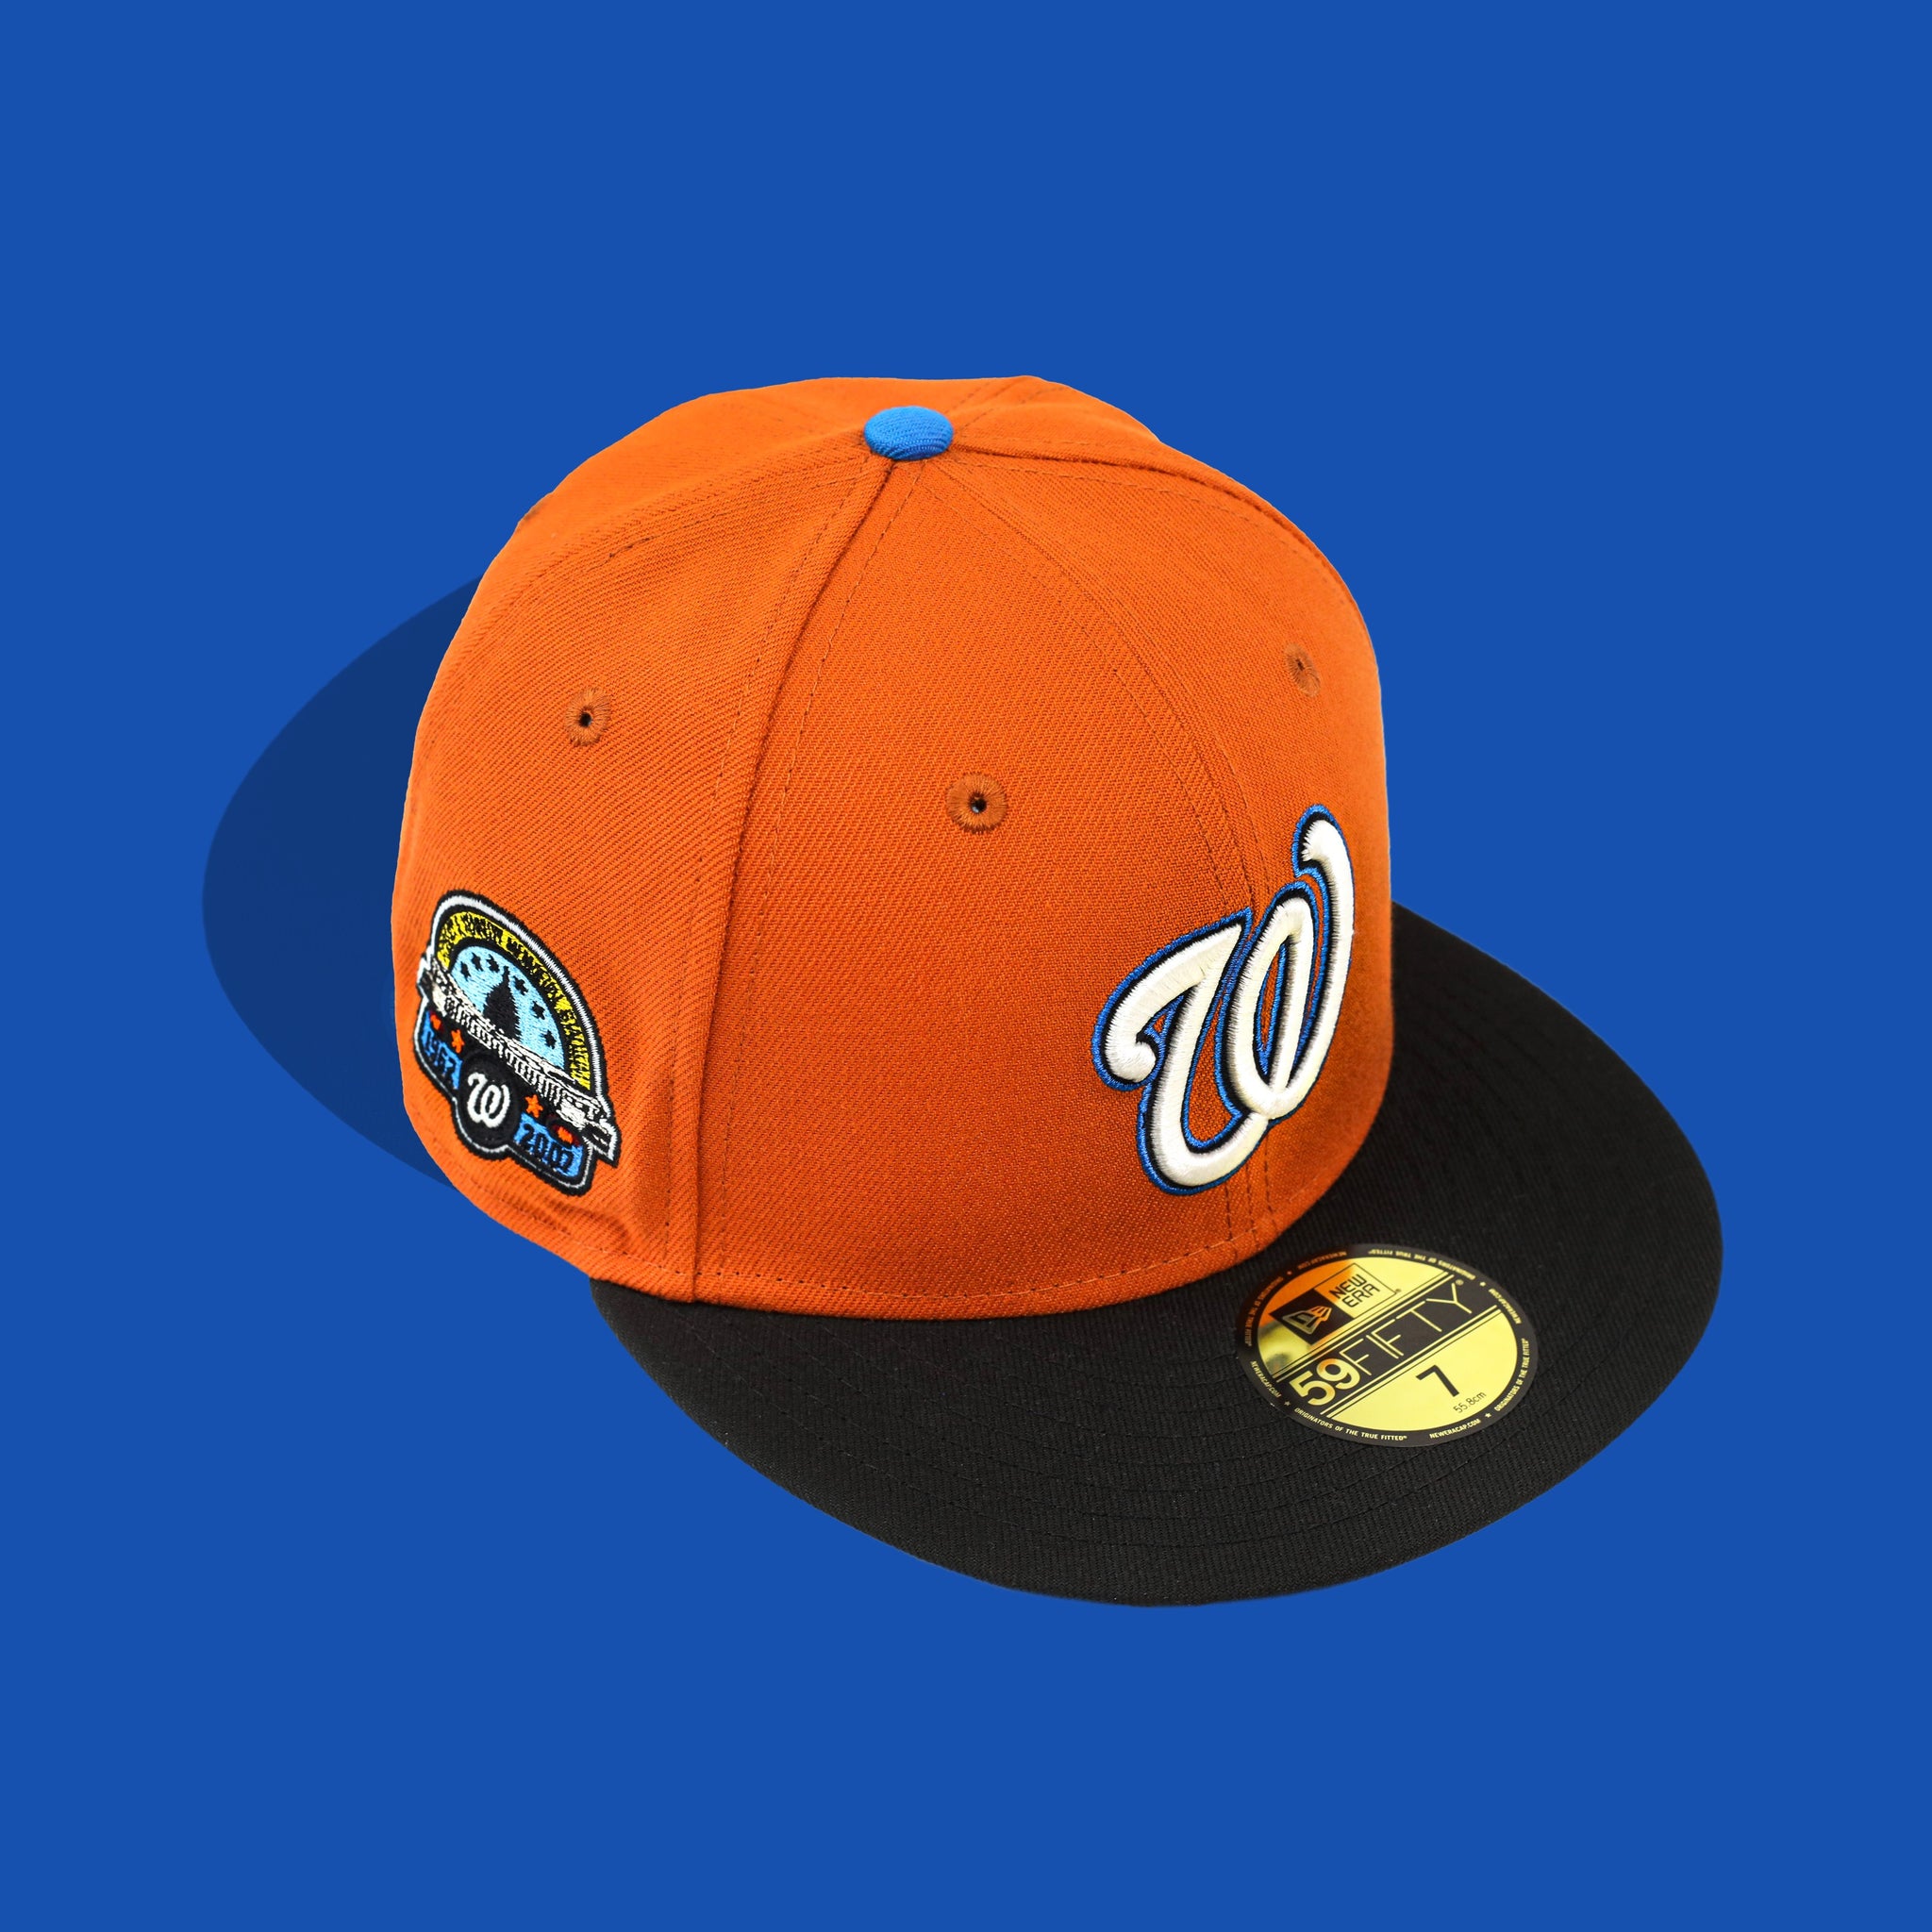 Washington Nationals Hats & Caps  Washington nationals, New era